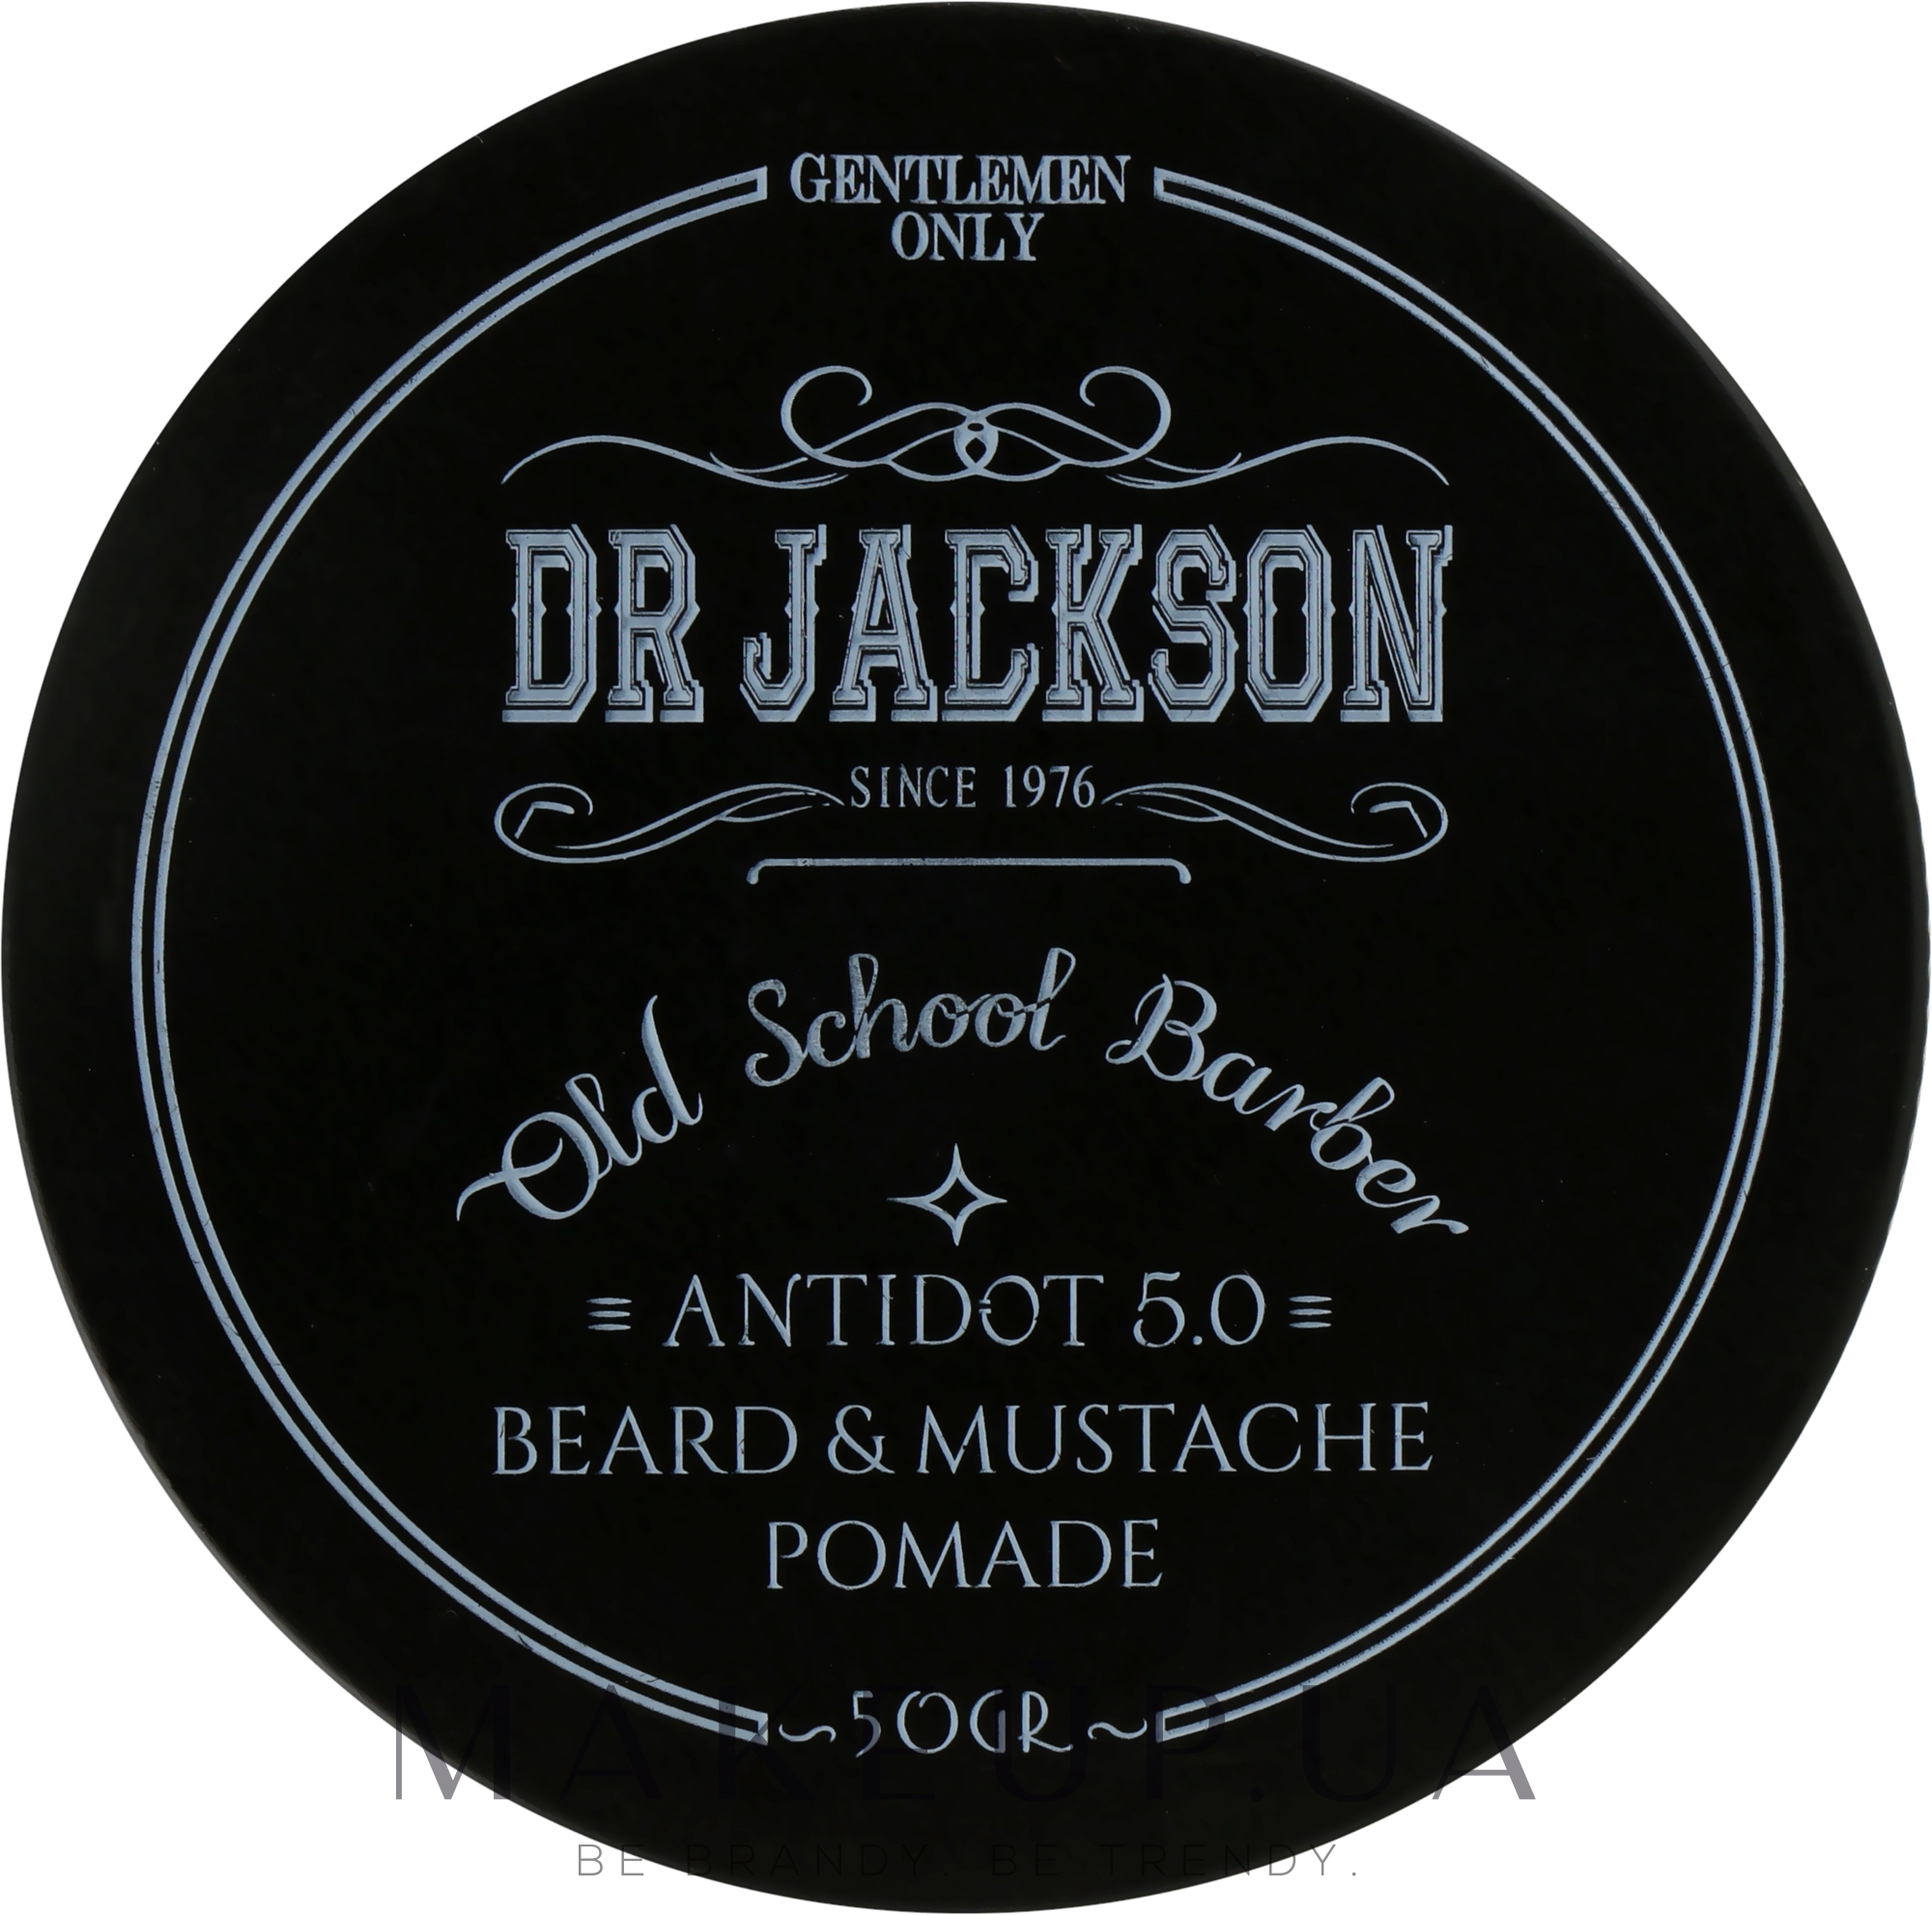 ПОМАДА ДЛЯ БОРОДЫ СИЛЬНОЙ ФИКСАЦИИ АНТИДОТ 5.0 - Dr Jackson Gentlemen Only Old School Barber Antidot 5.0 Beard & Mustache Pomade — фото 50g